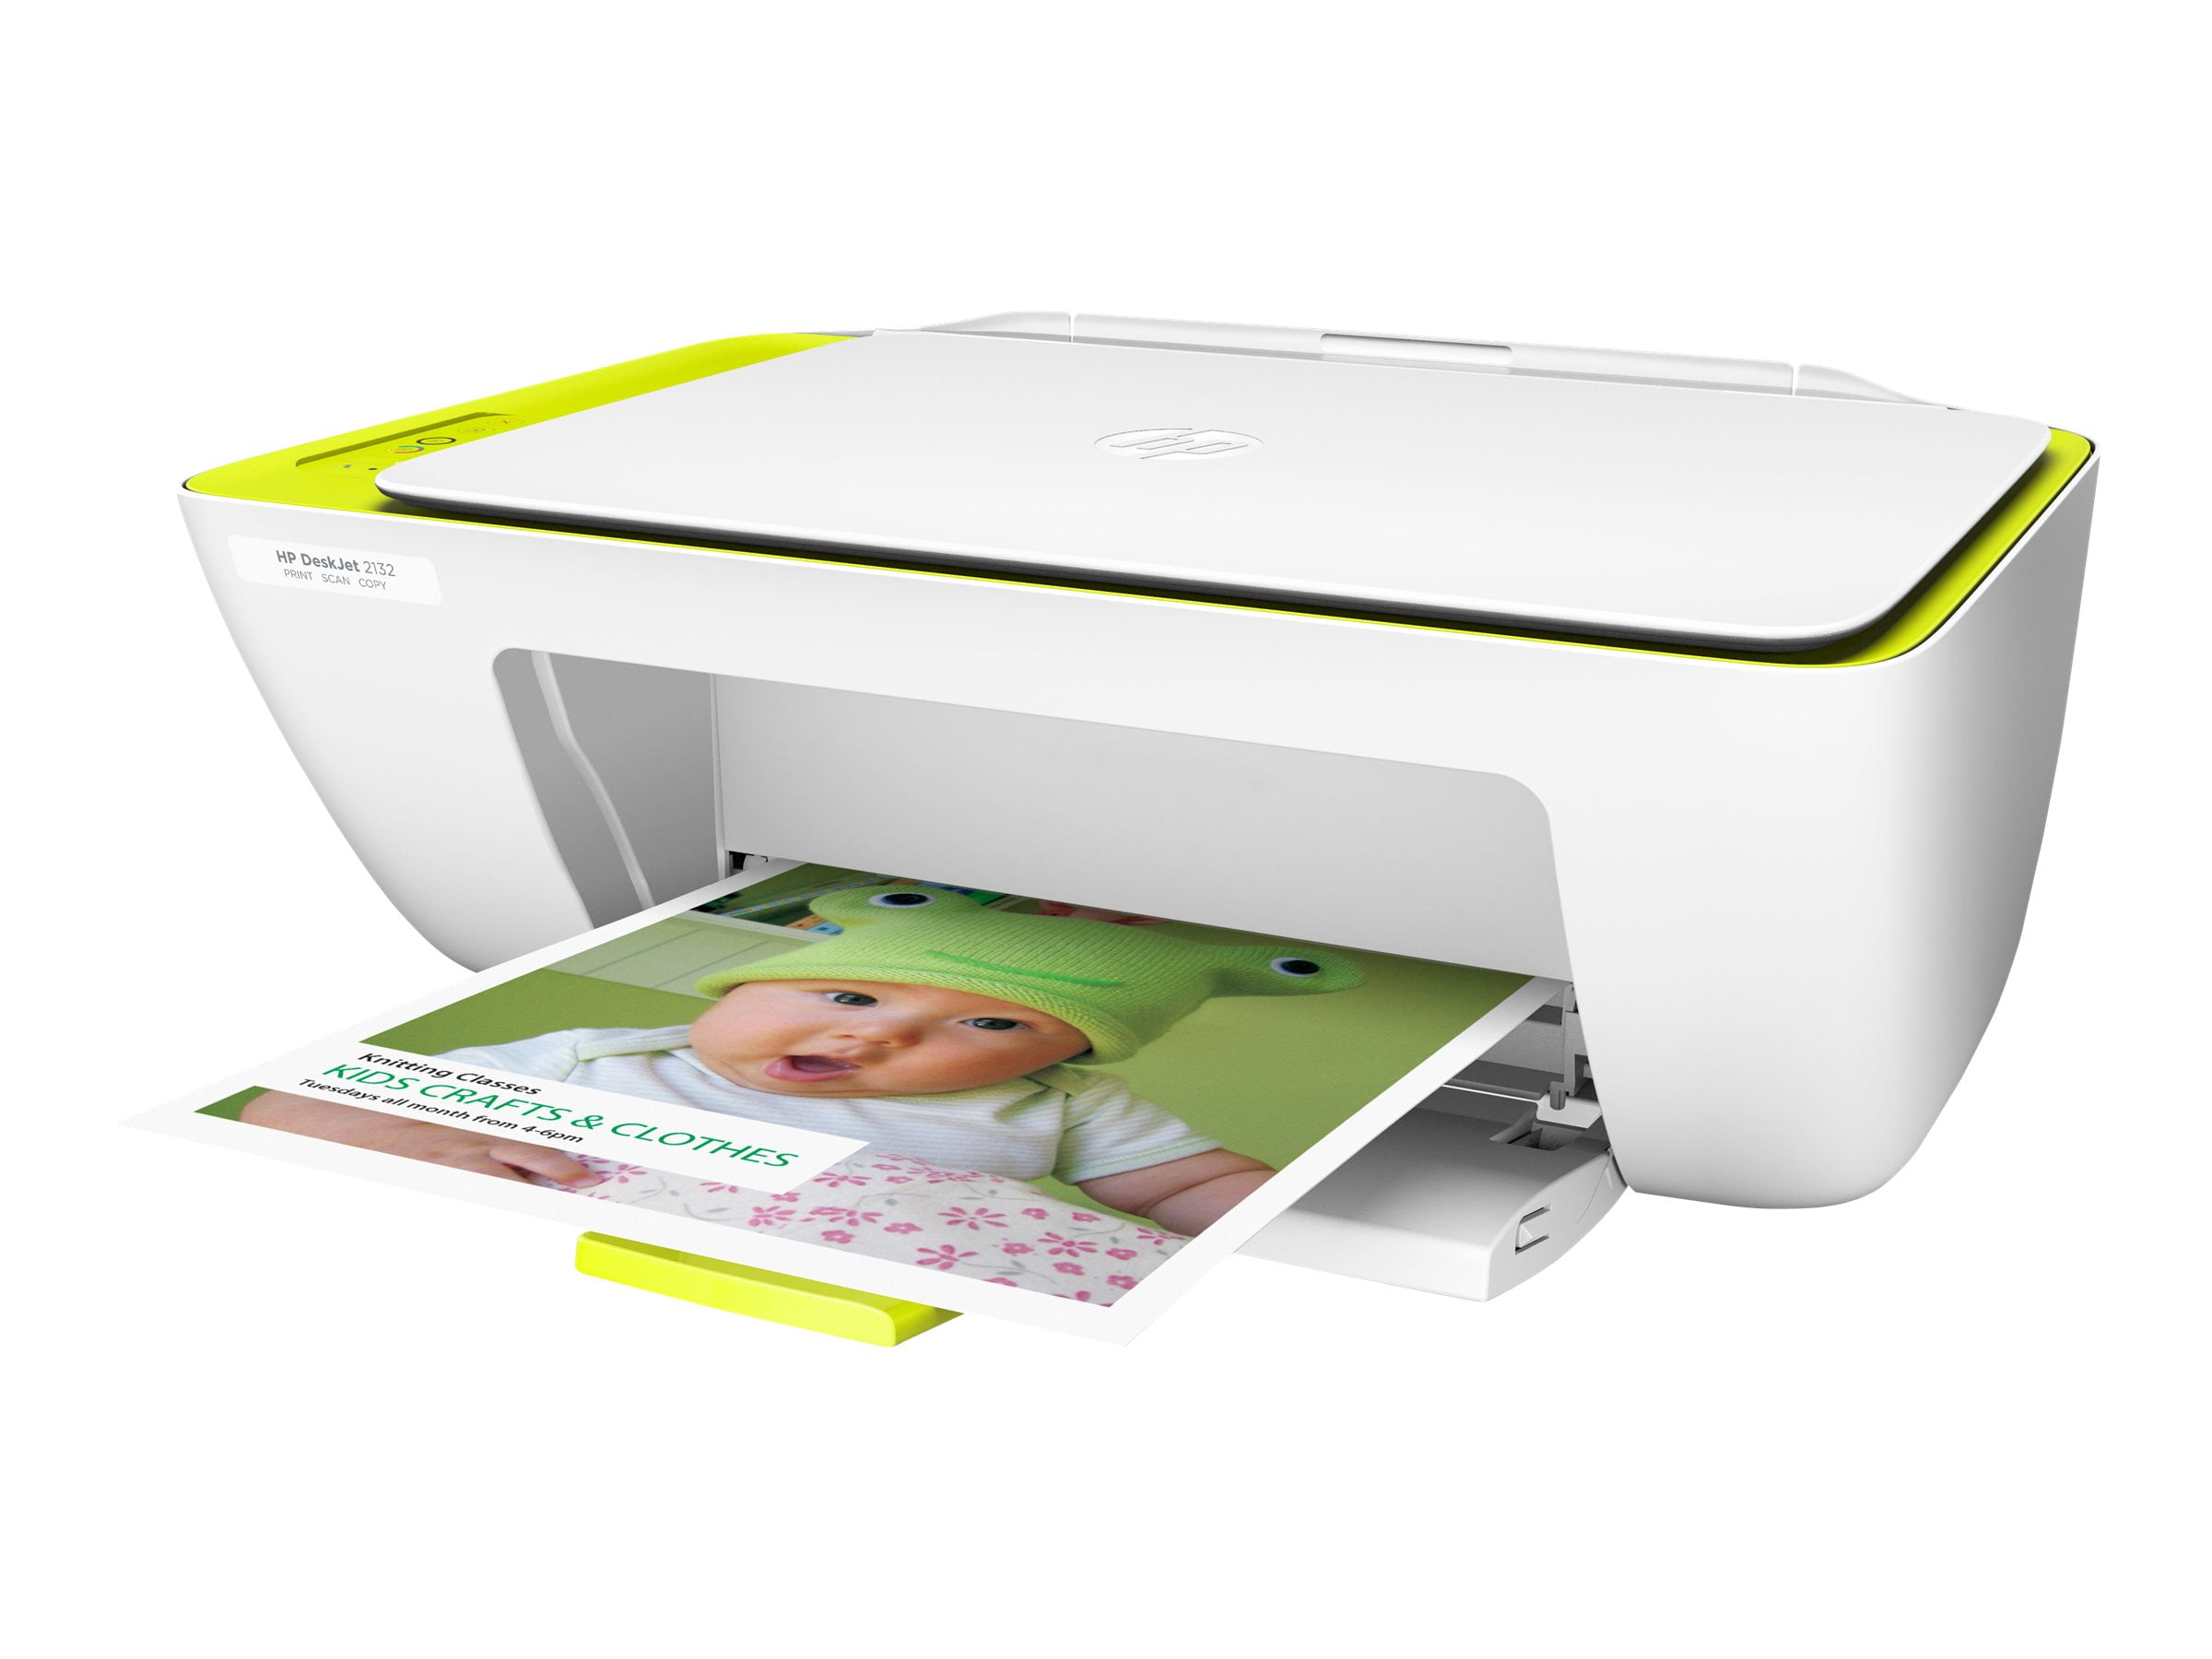 patois Minimer kultur HP Deskjet 2132 All-in-One Printer/Copier/Scanner - Walmart.com